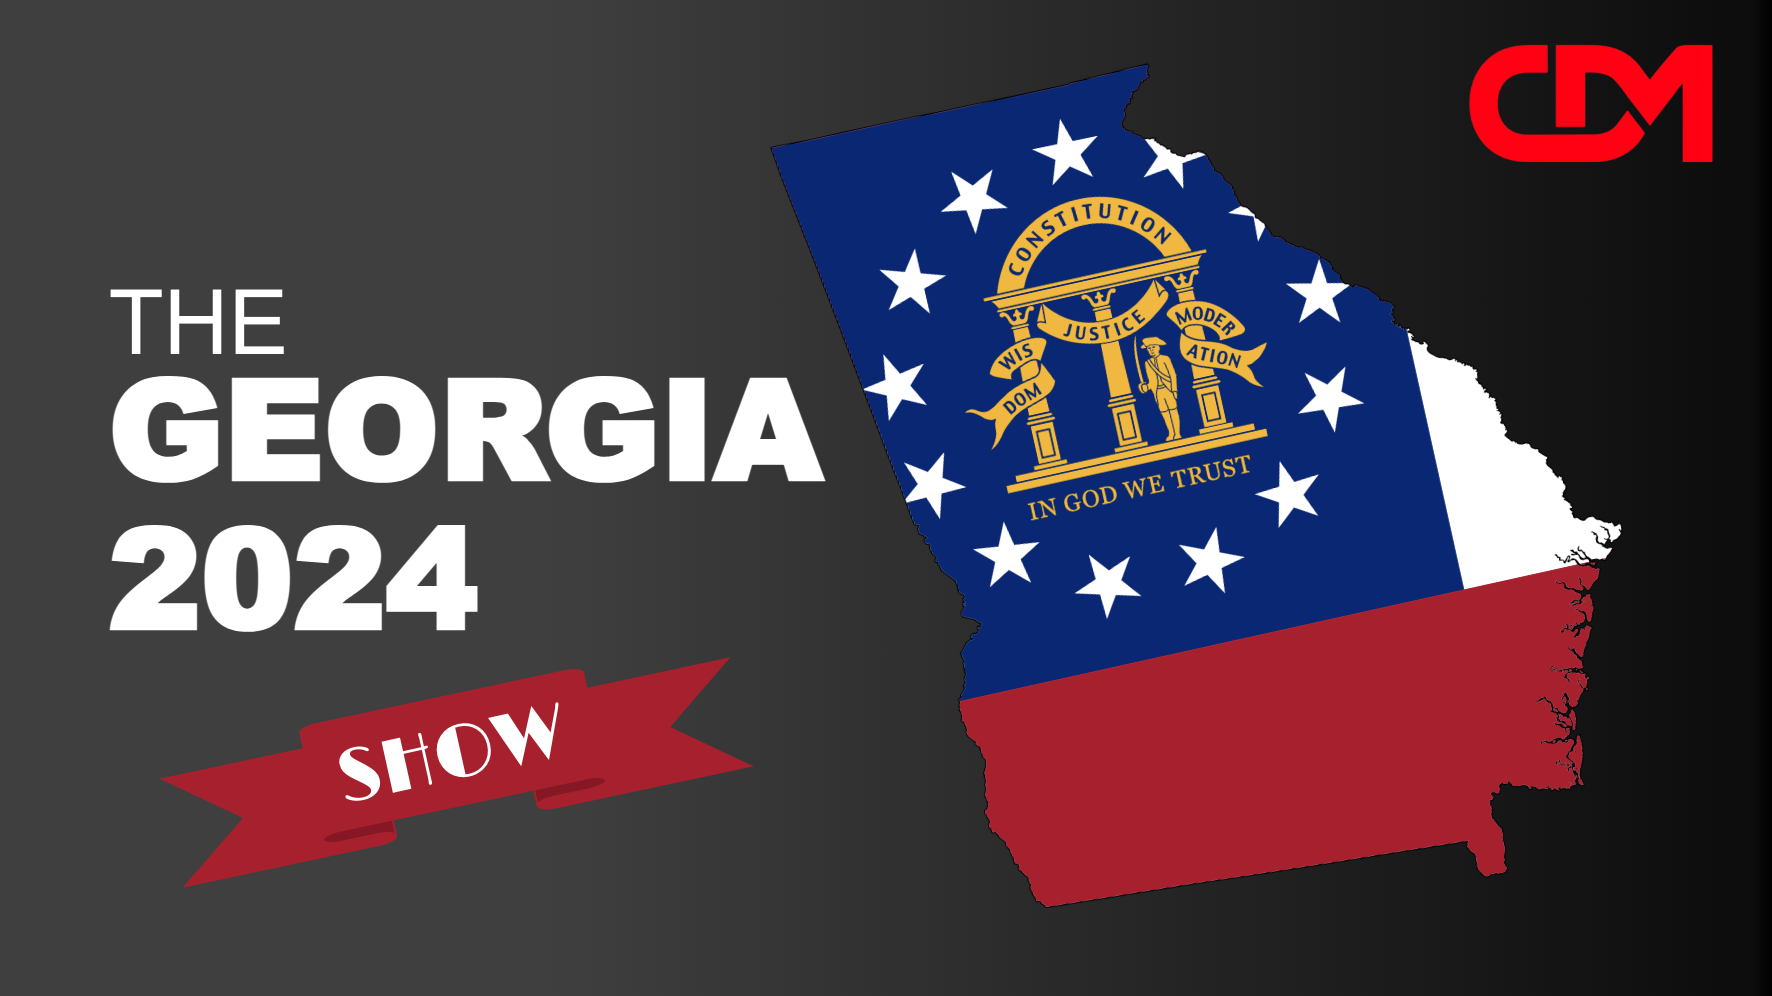 LIVE 2pm EST: The Georgia 2024 Show! With Robert Bowes, Kevin Moncla, Chris Gleason, Marjorie Wildcraft, Kurt Brackob